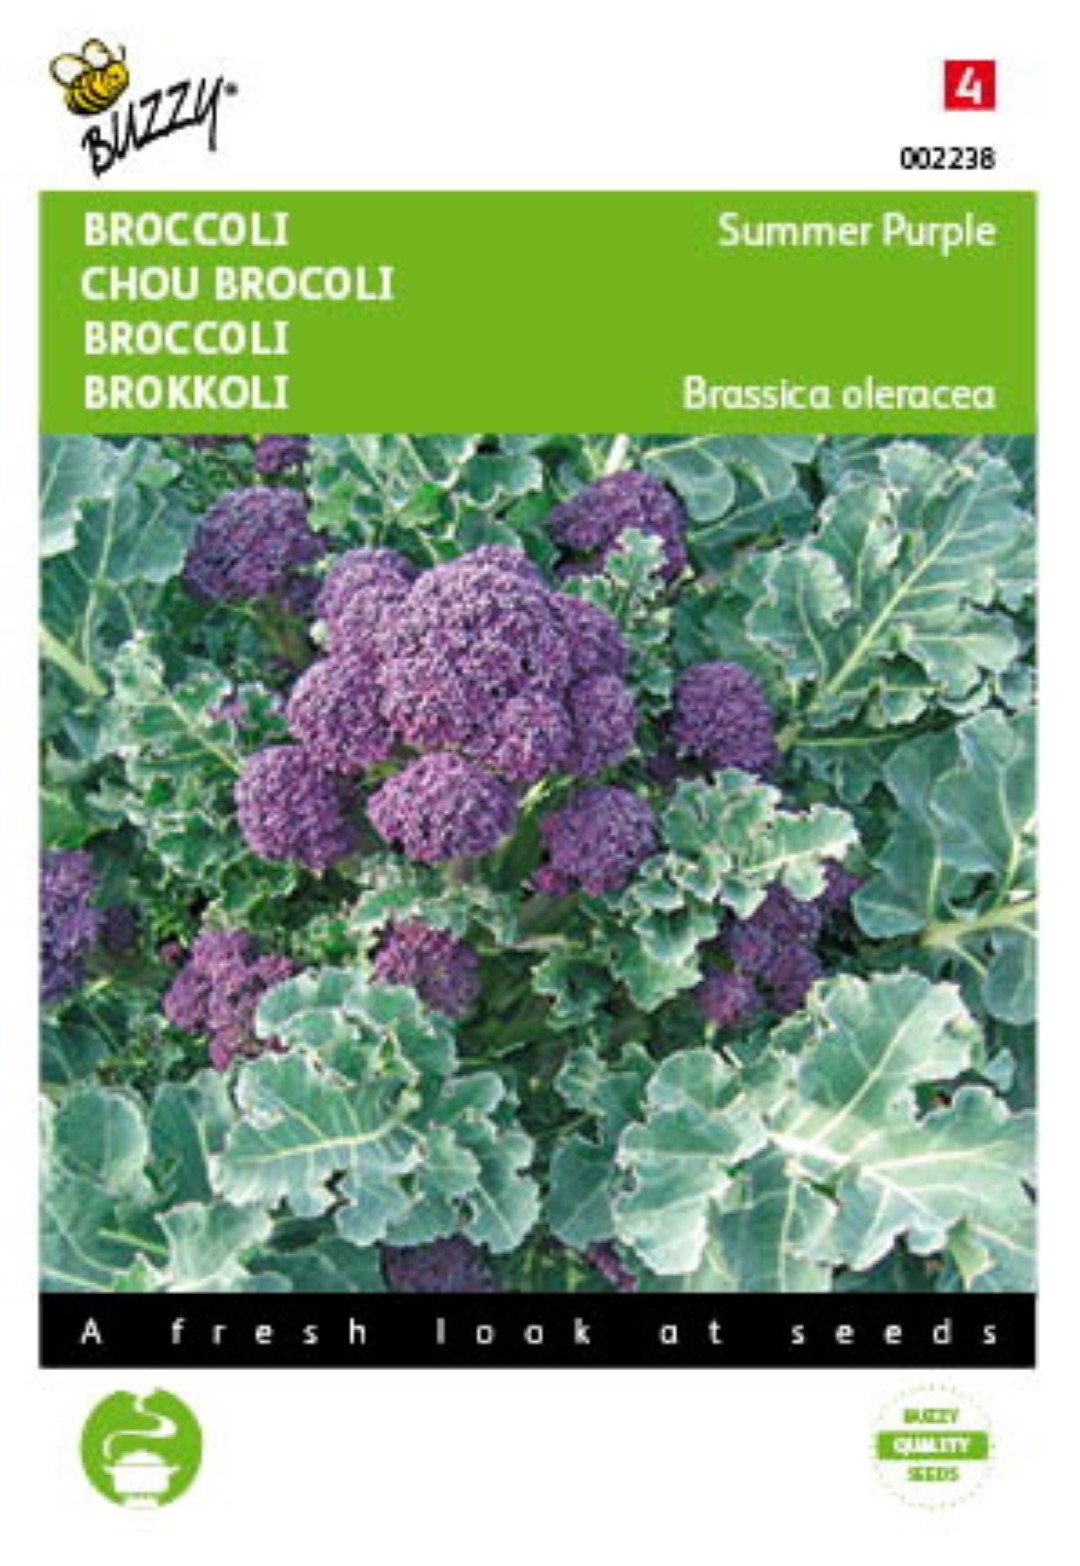 https://www.warentuin.nl/media/catalog/product/1/7/1778711117022381_buzzy_seeds_tuinzaden_buzzy_broccoli_summer_purple_df17.jpeg